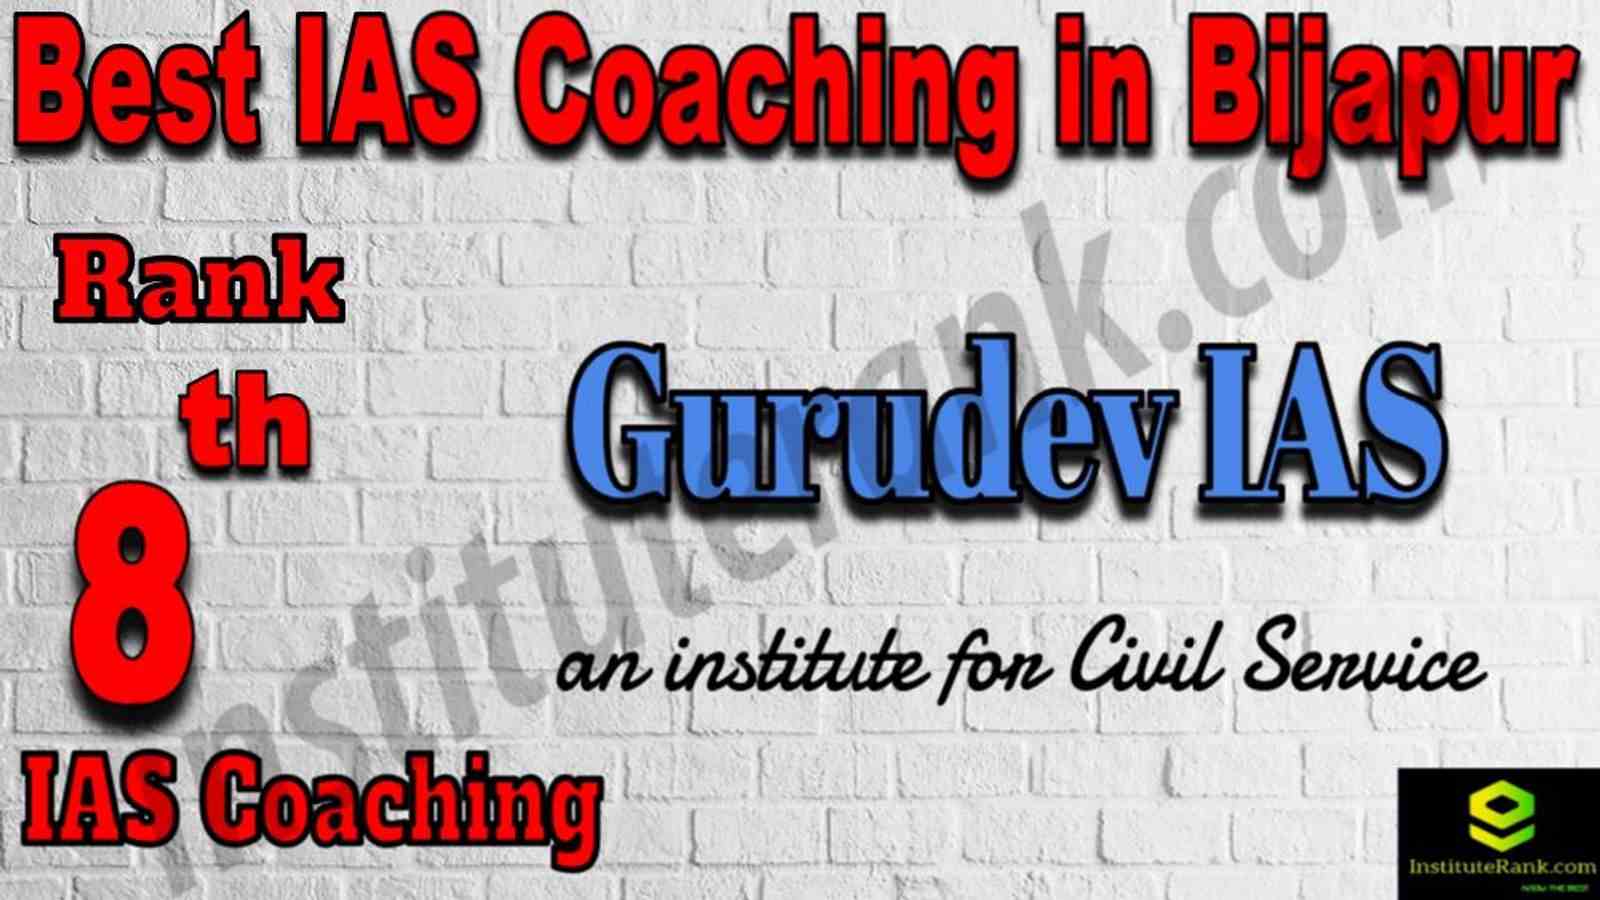 8th Best IAS Coaching in Bijapur